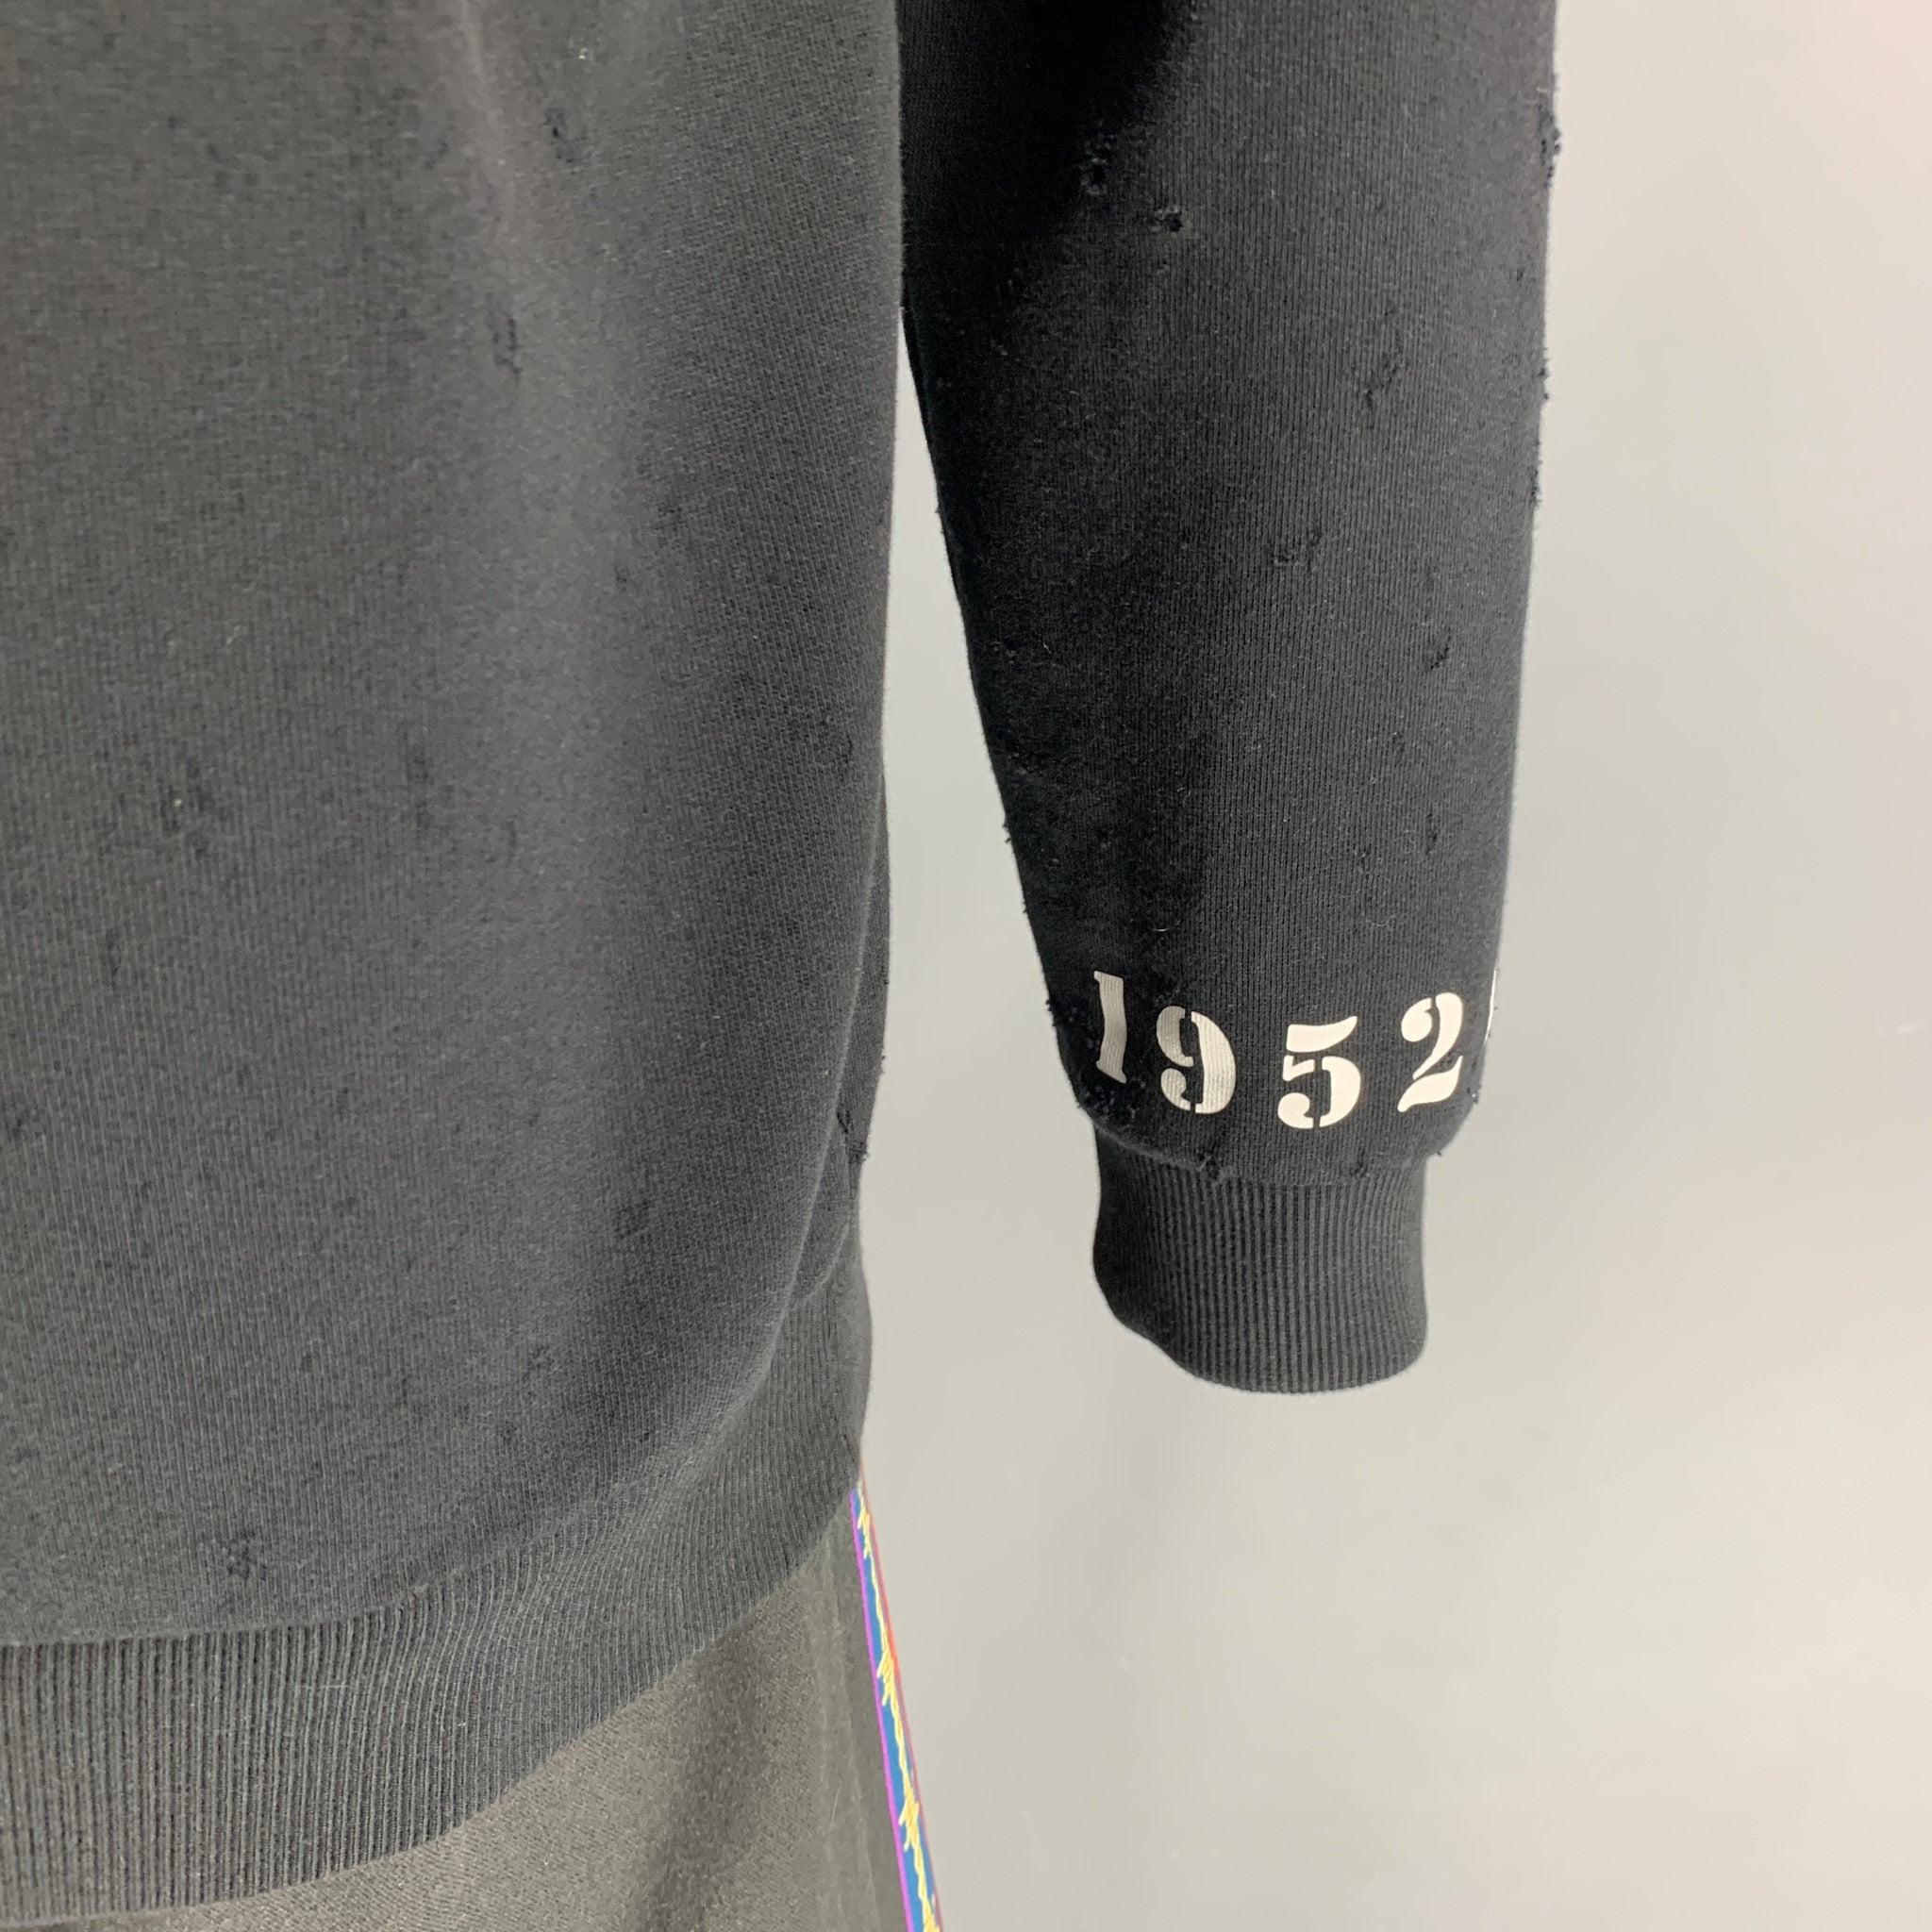 GIVENCHY by Ricardo Tisci Size S/M Cotton Oversized Sweatshirt Short Set For Sale 1